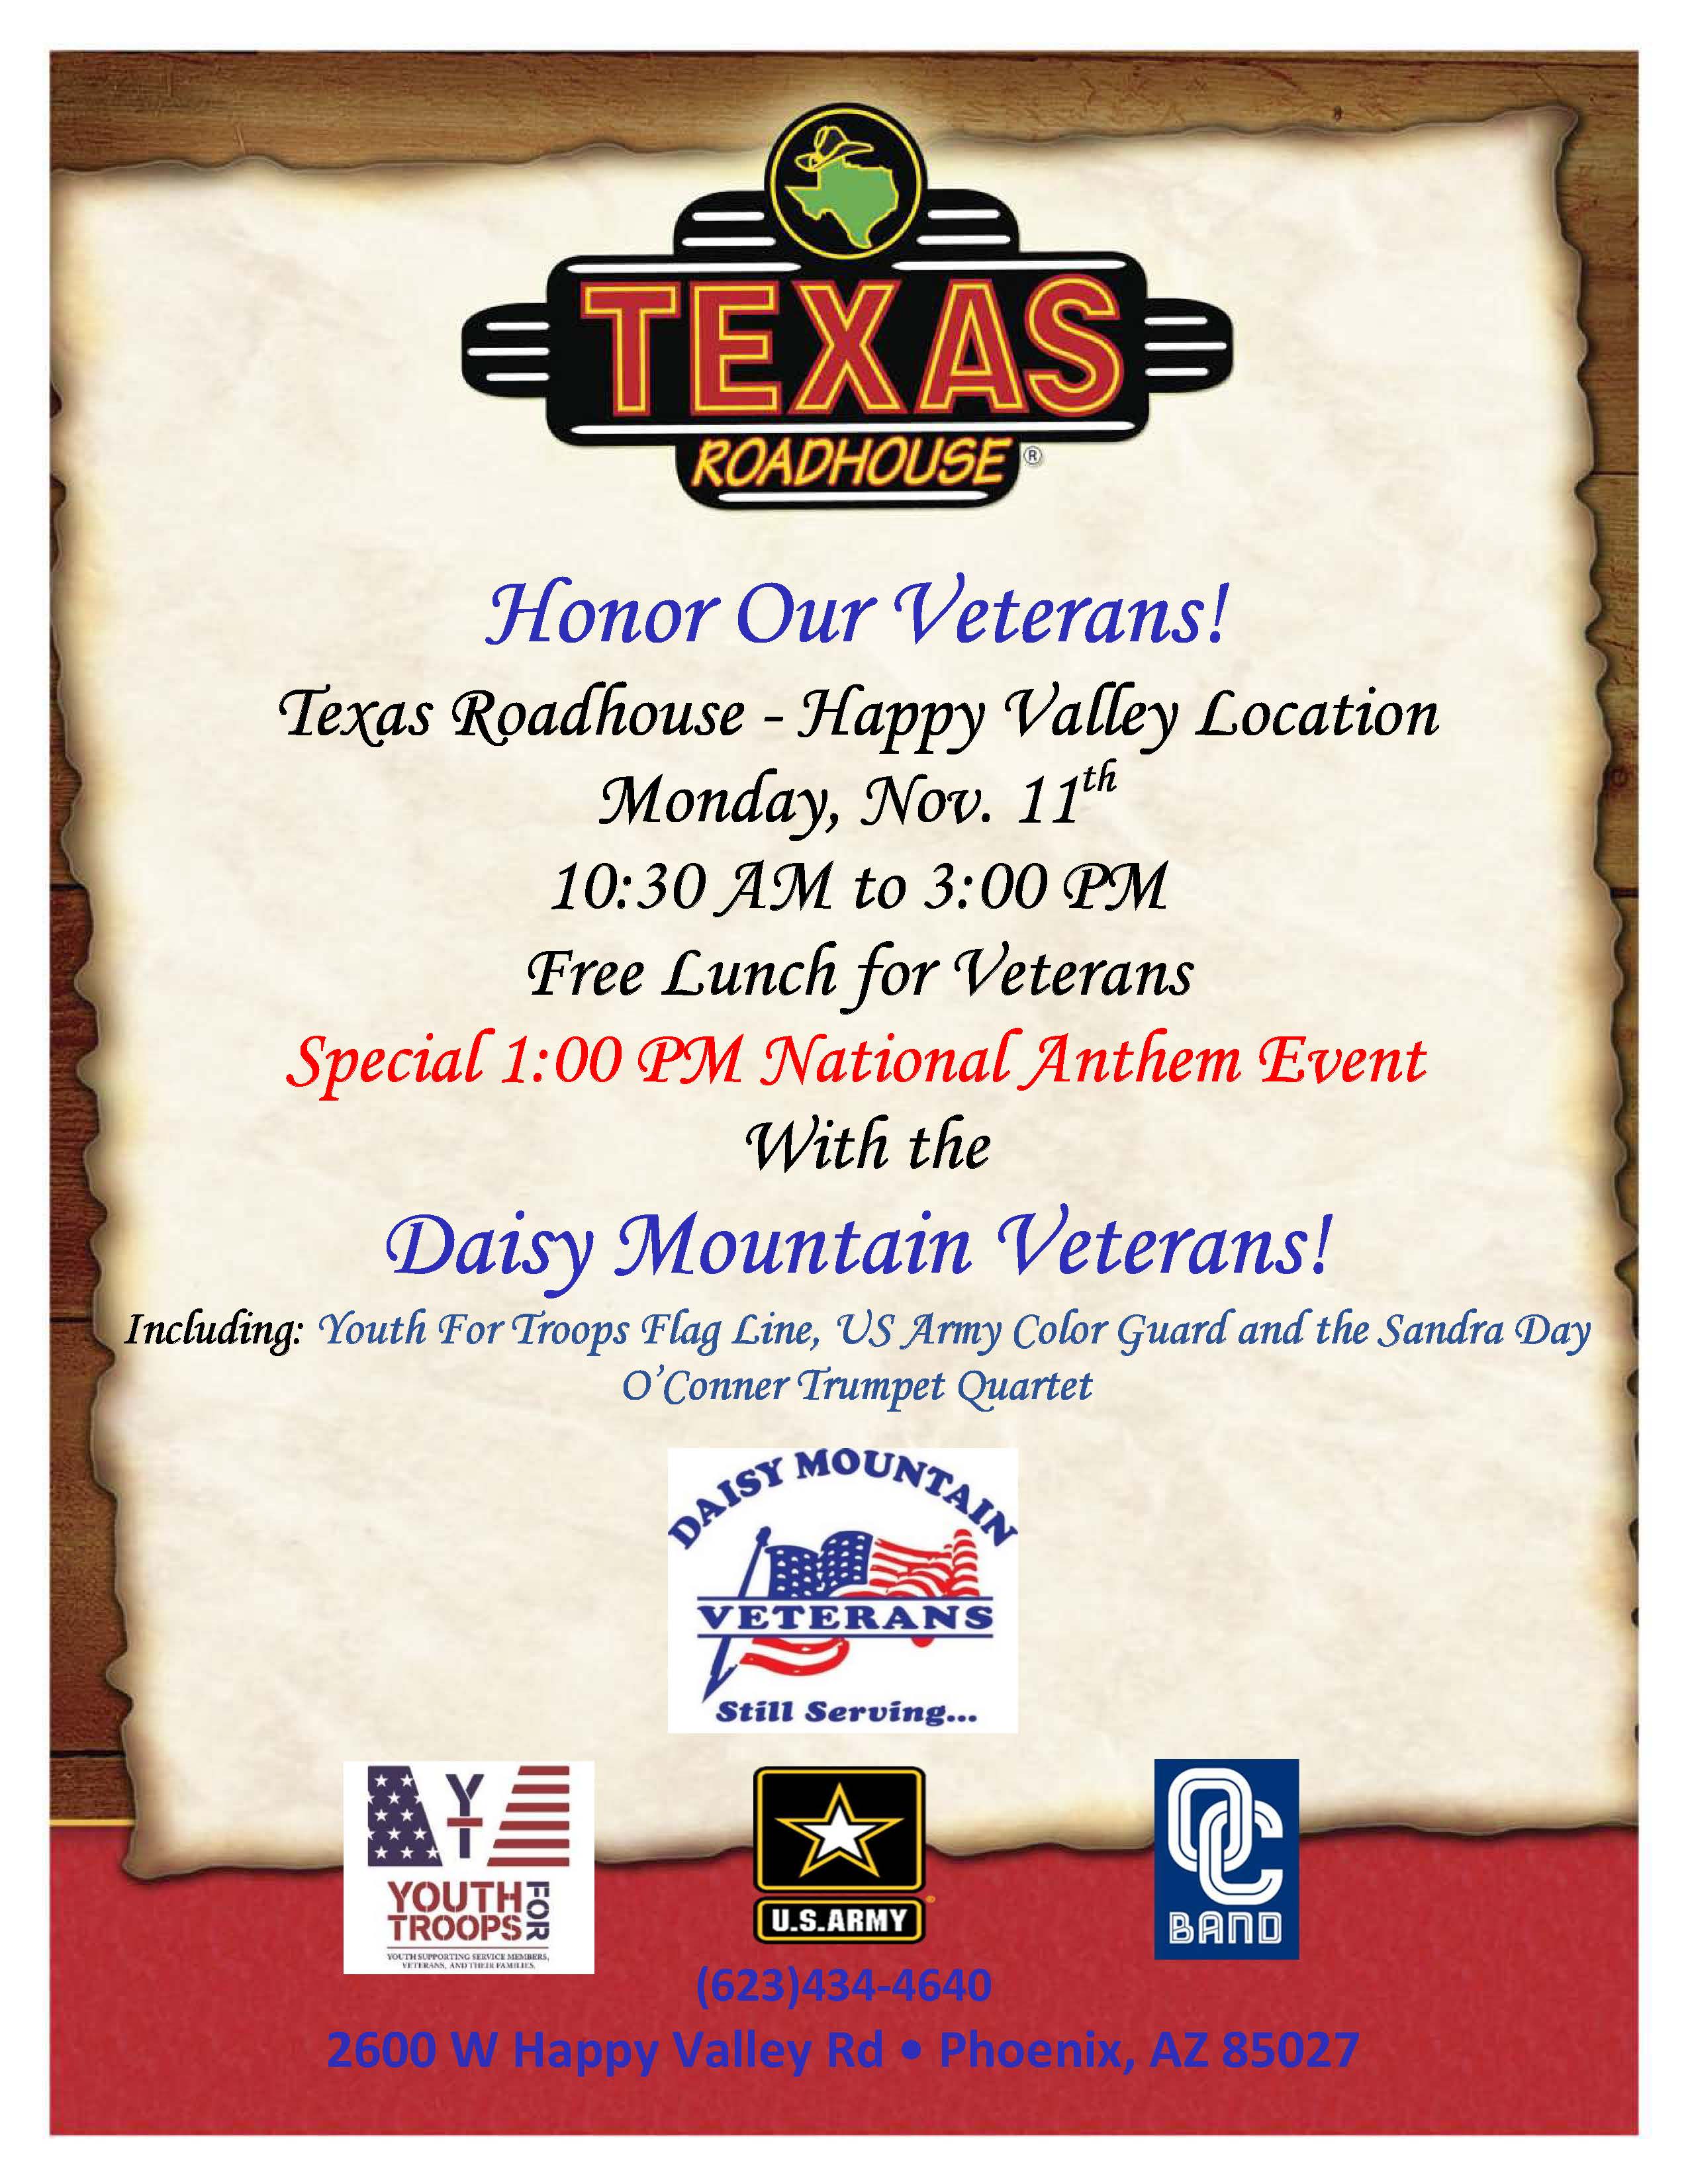 Home - Daisy Mountain Veterans : Daisy Mountain Veterans